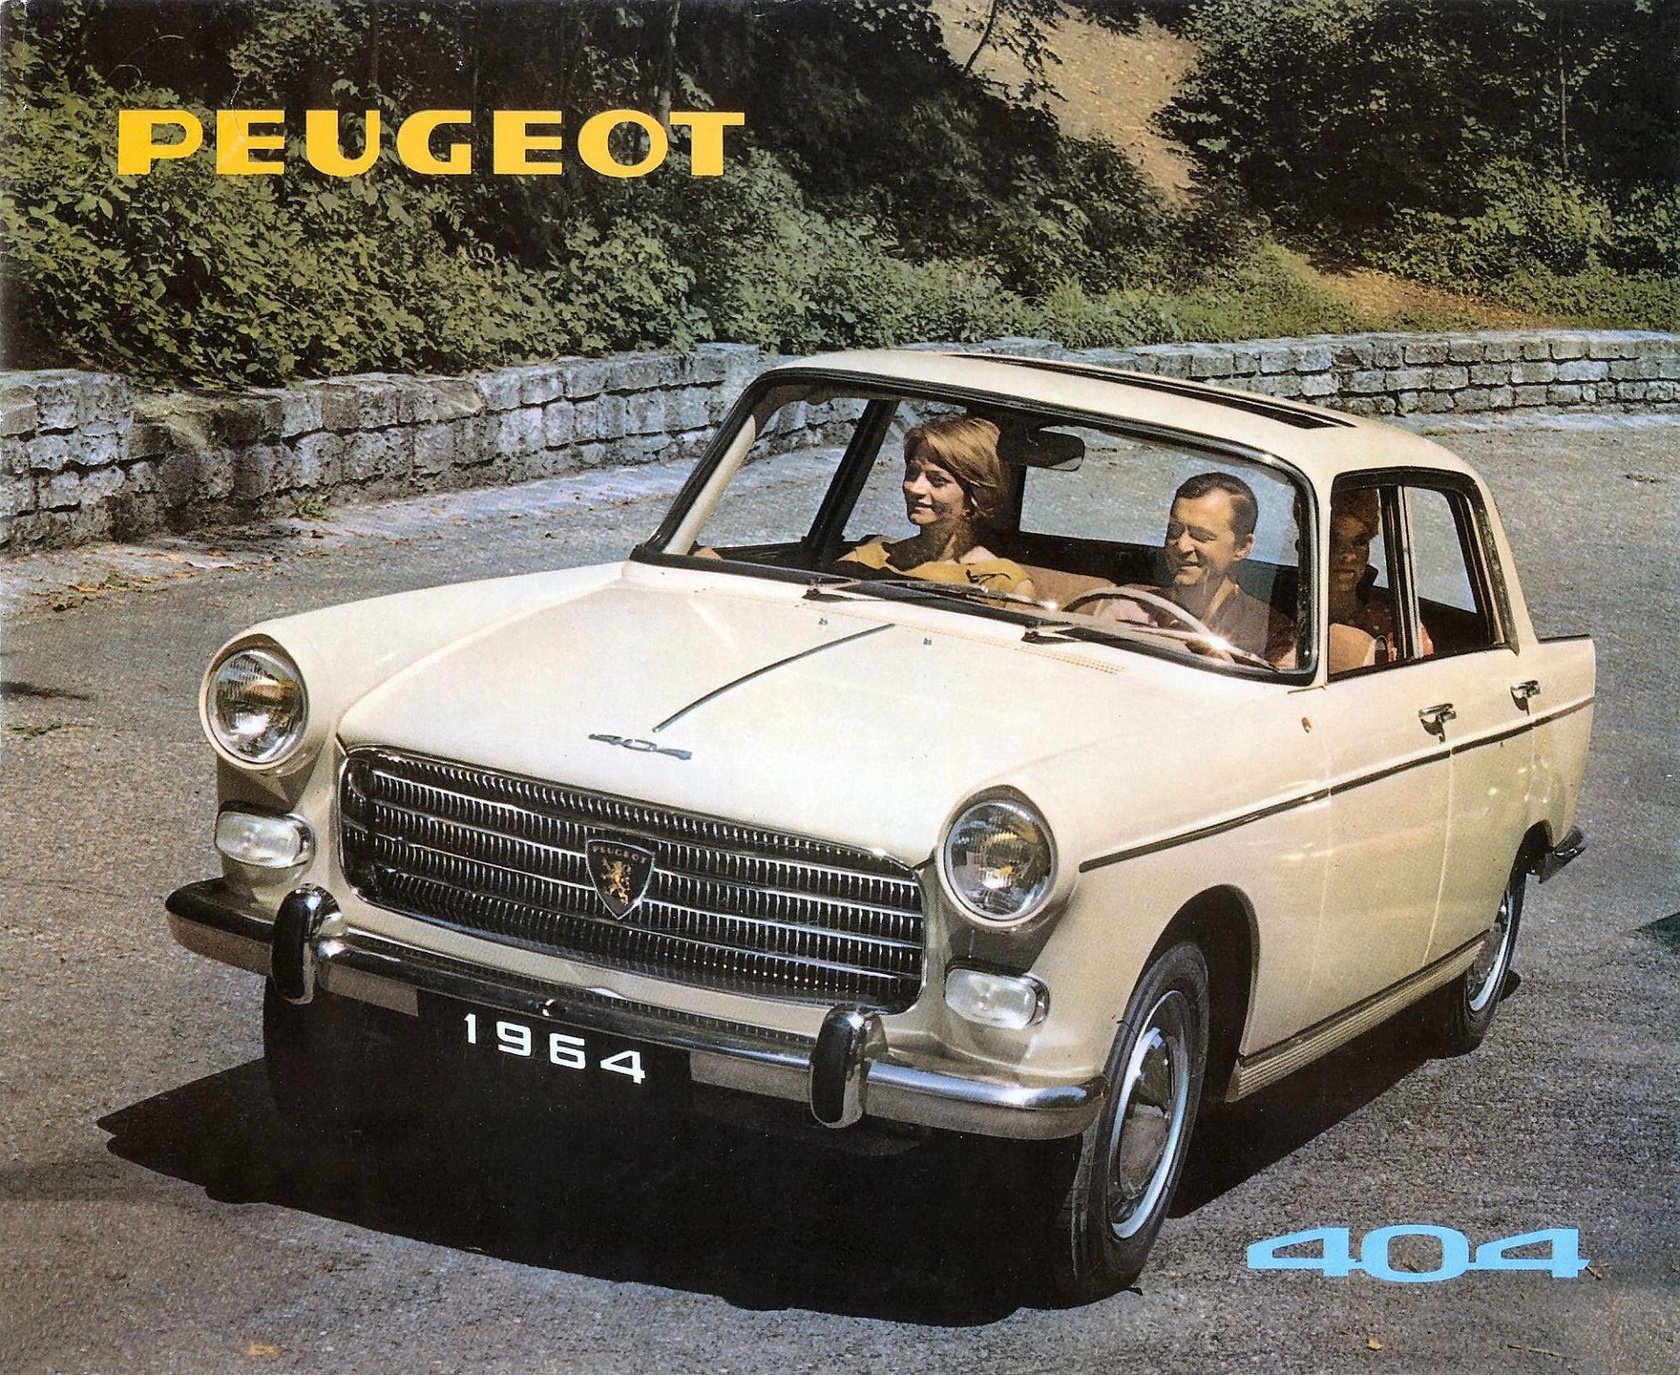 Peugeot ma nowe stare logo